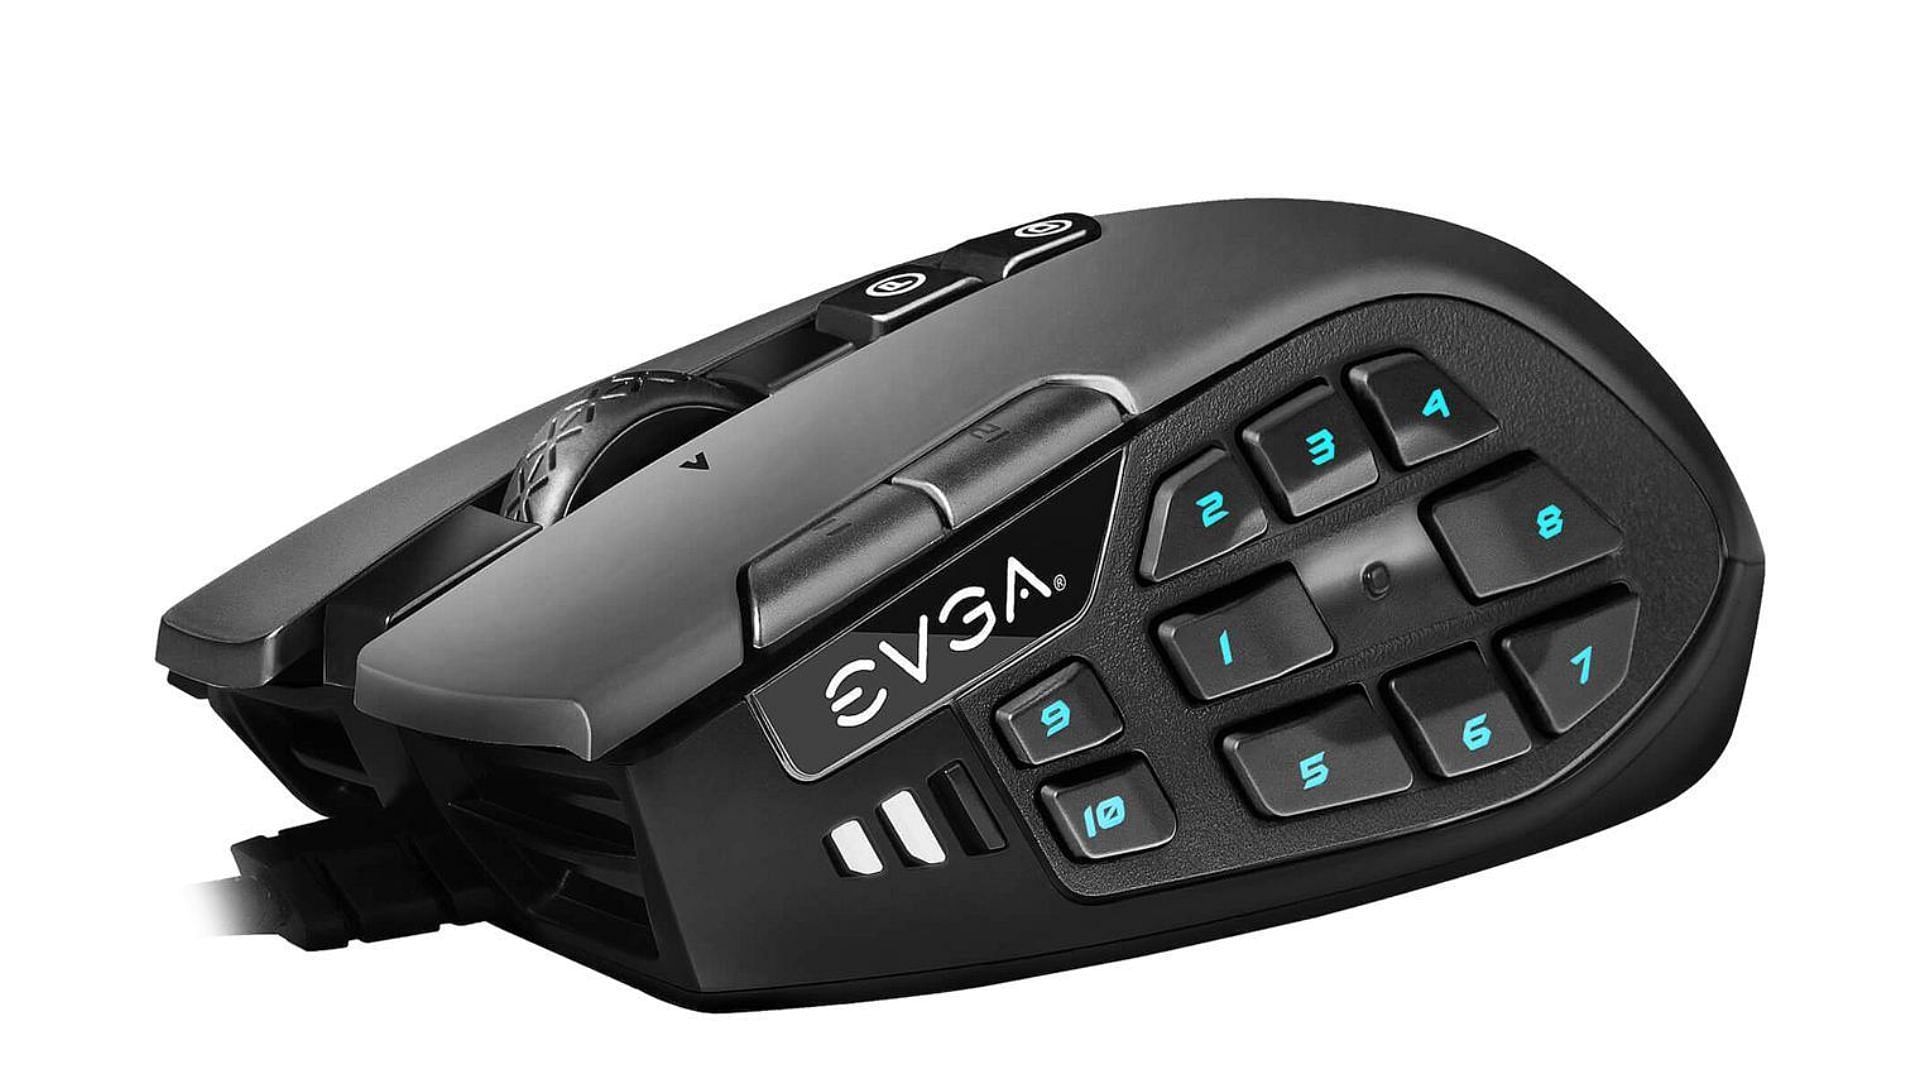 The EVGA X15 MMO Gaming Mouse (Image via Ubuy India)